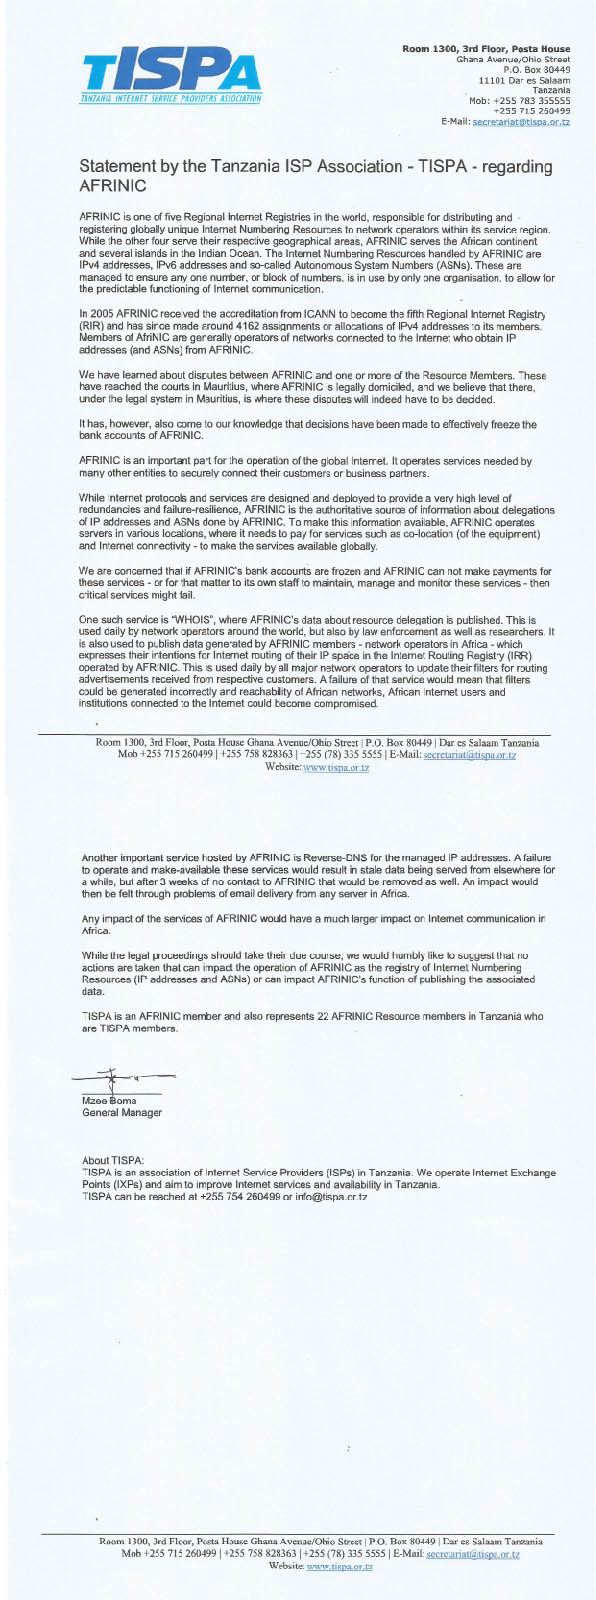 Statement of Tanzania ISP Association (TISPA) - Regarding AFRINIC